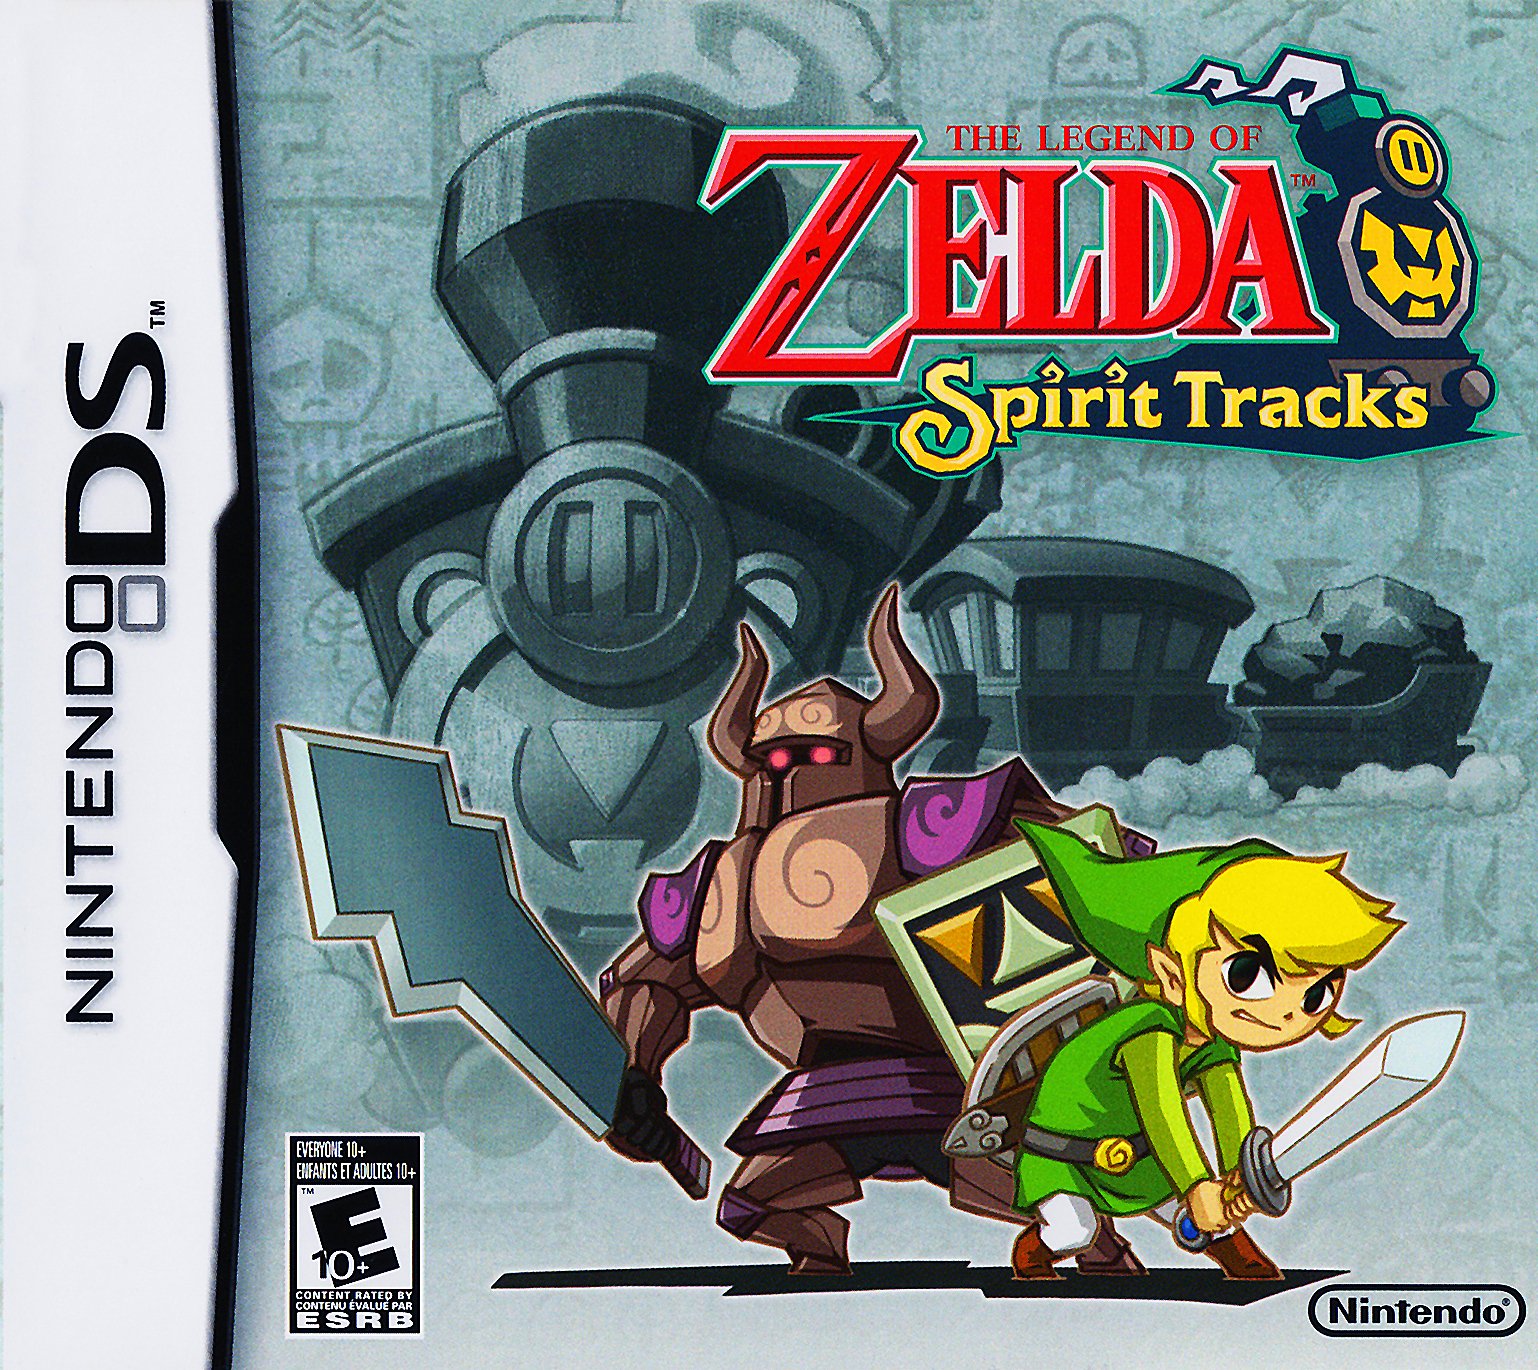 The Legend of Zelda: Spirit Tracks (Kiosk Demo)